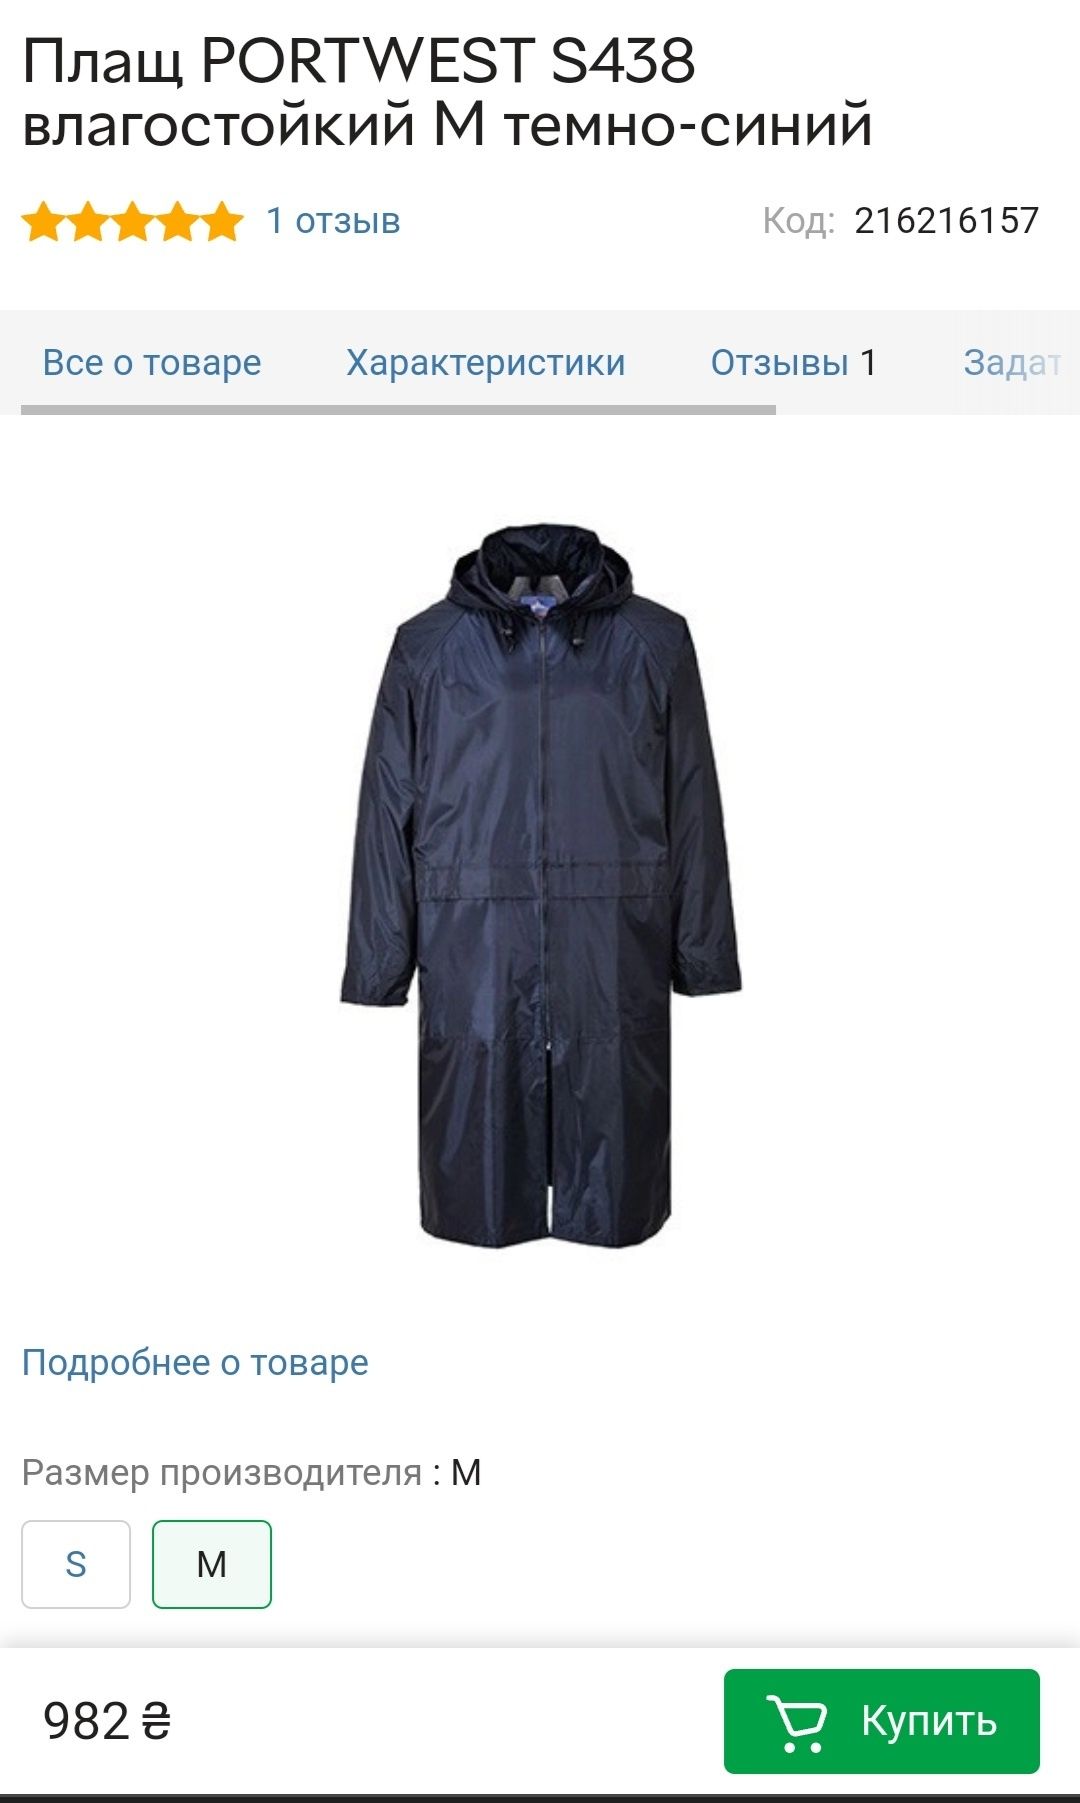 Плащ PORTWEST S438 влагостойкий  темно-синий дождевик спец одежда